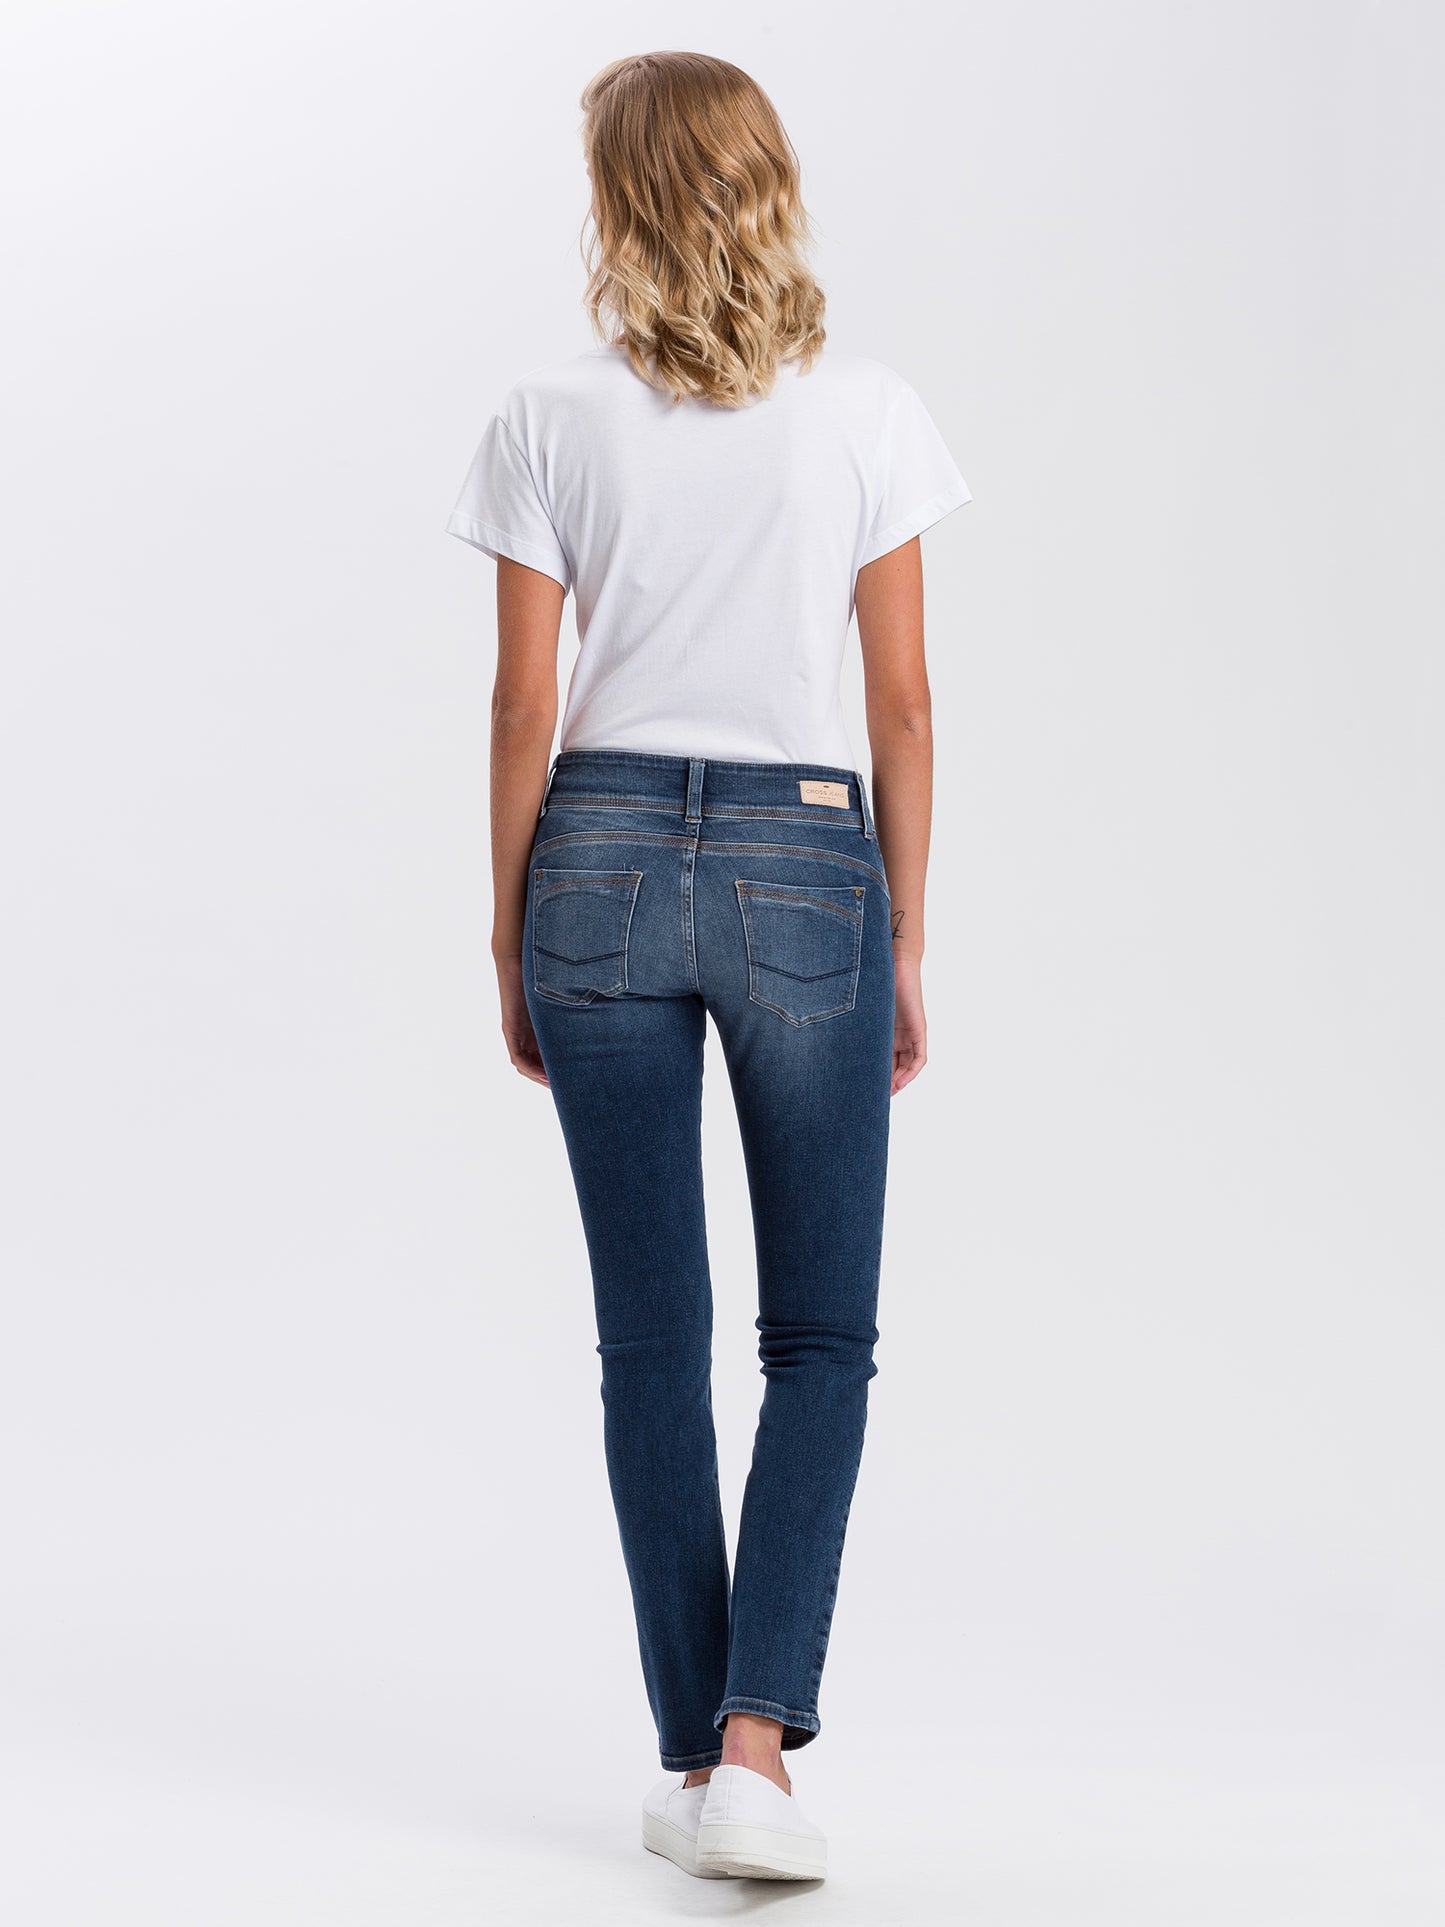 Loie Damen Jeans Regular Fit Mid Waist Straight Leg dunkelblau